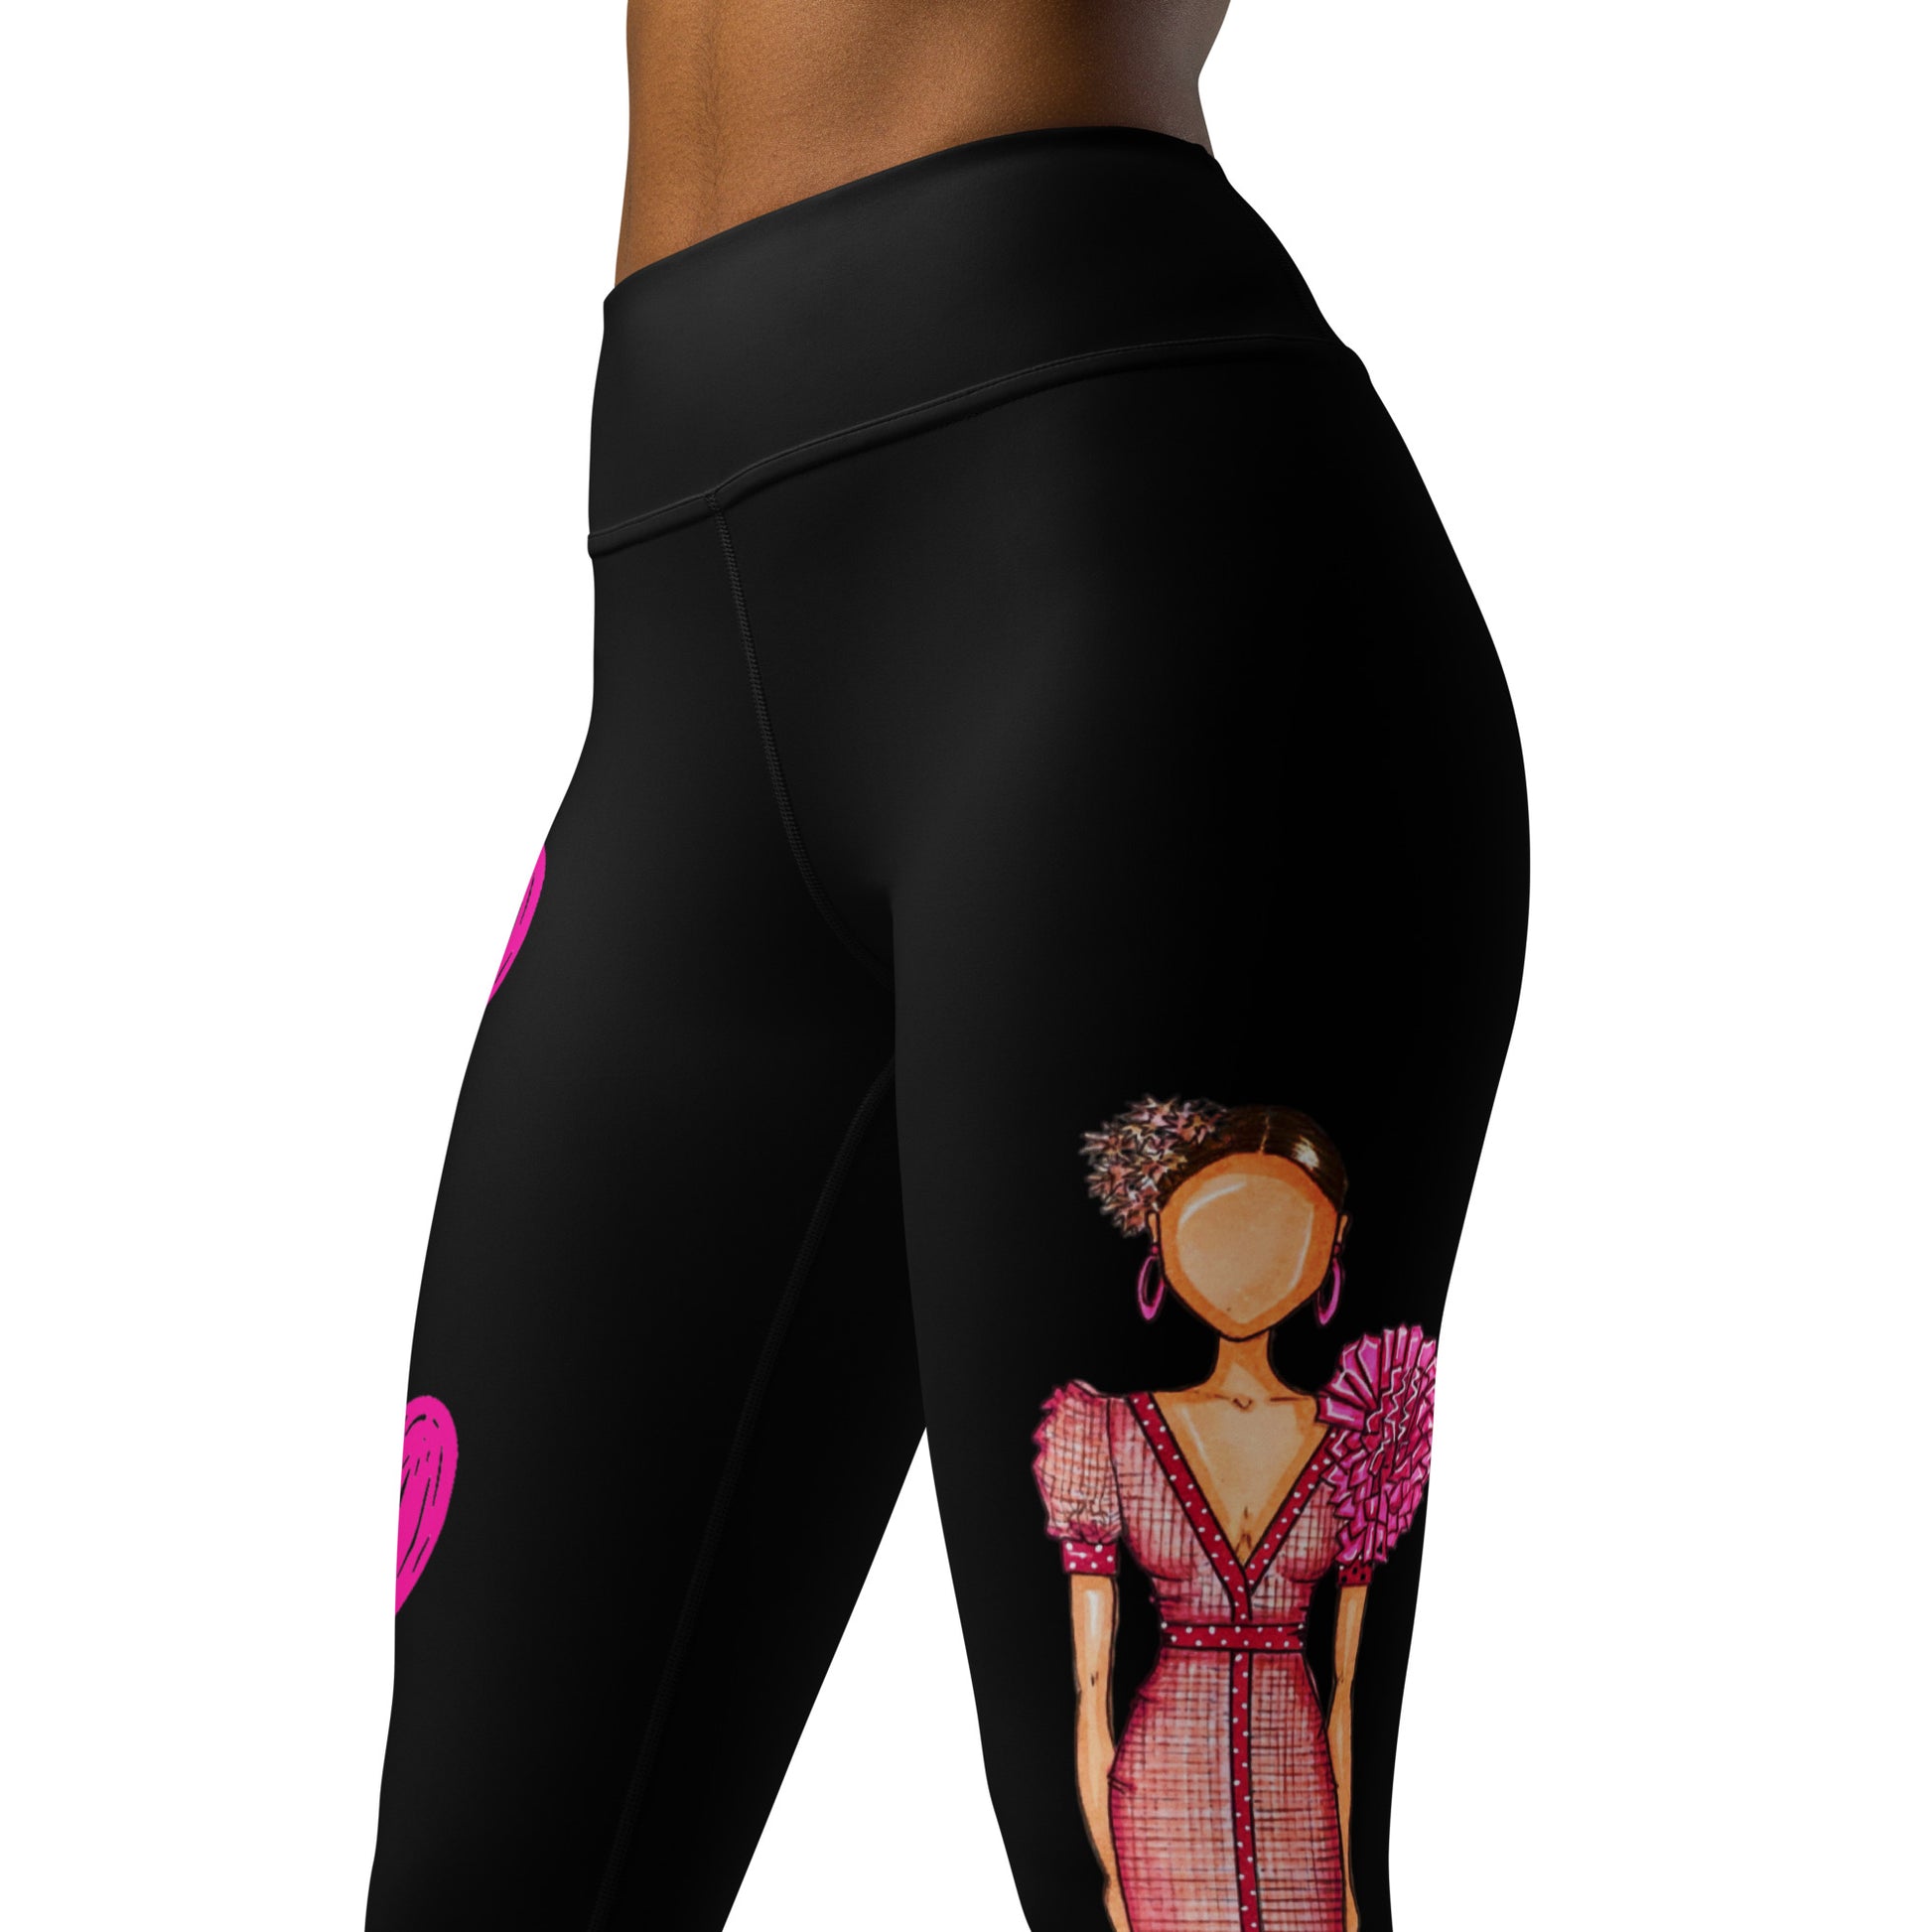 Flamenco Dancer Leggings, black high waisted yoga leggings with a pink dress and pink hearts design - IllustrArte